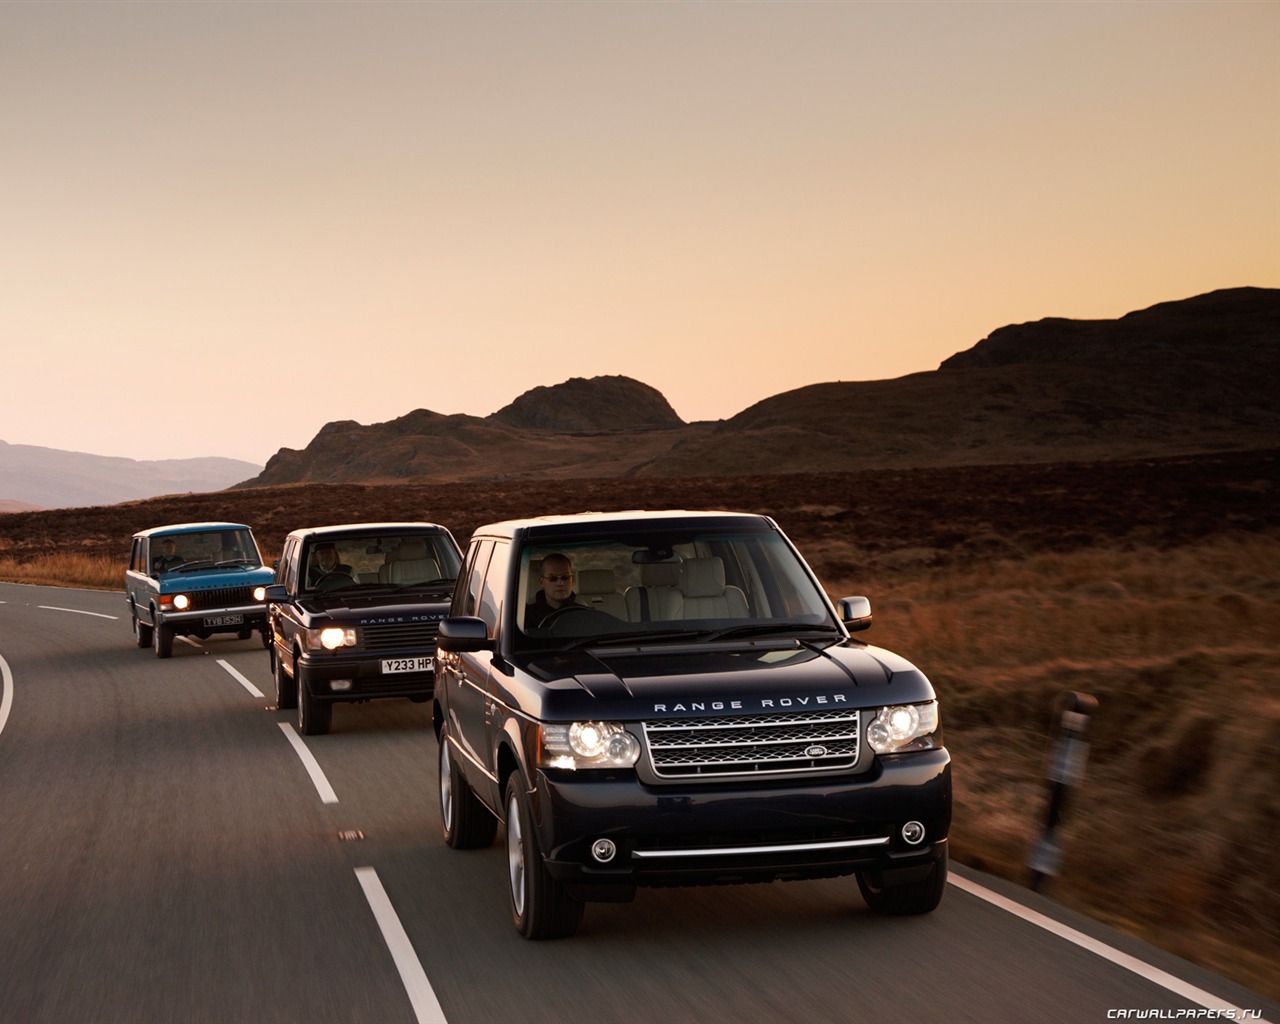 Land Rover Range Rover - 2011 路虎14 - 1280x1024